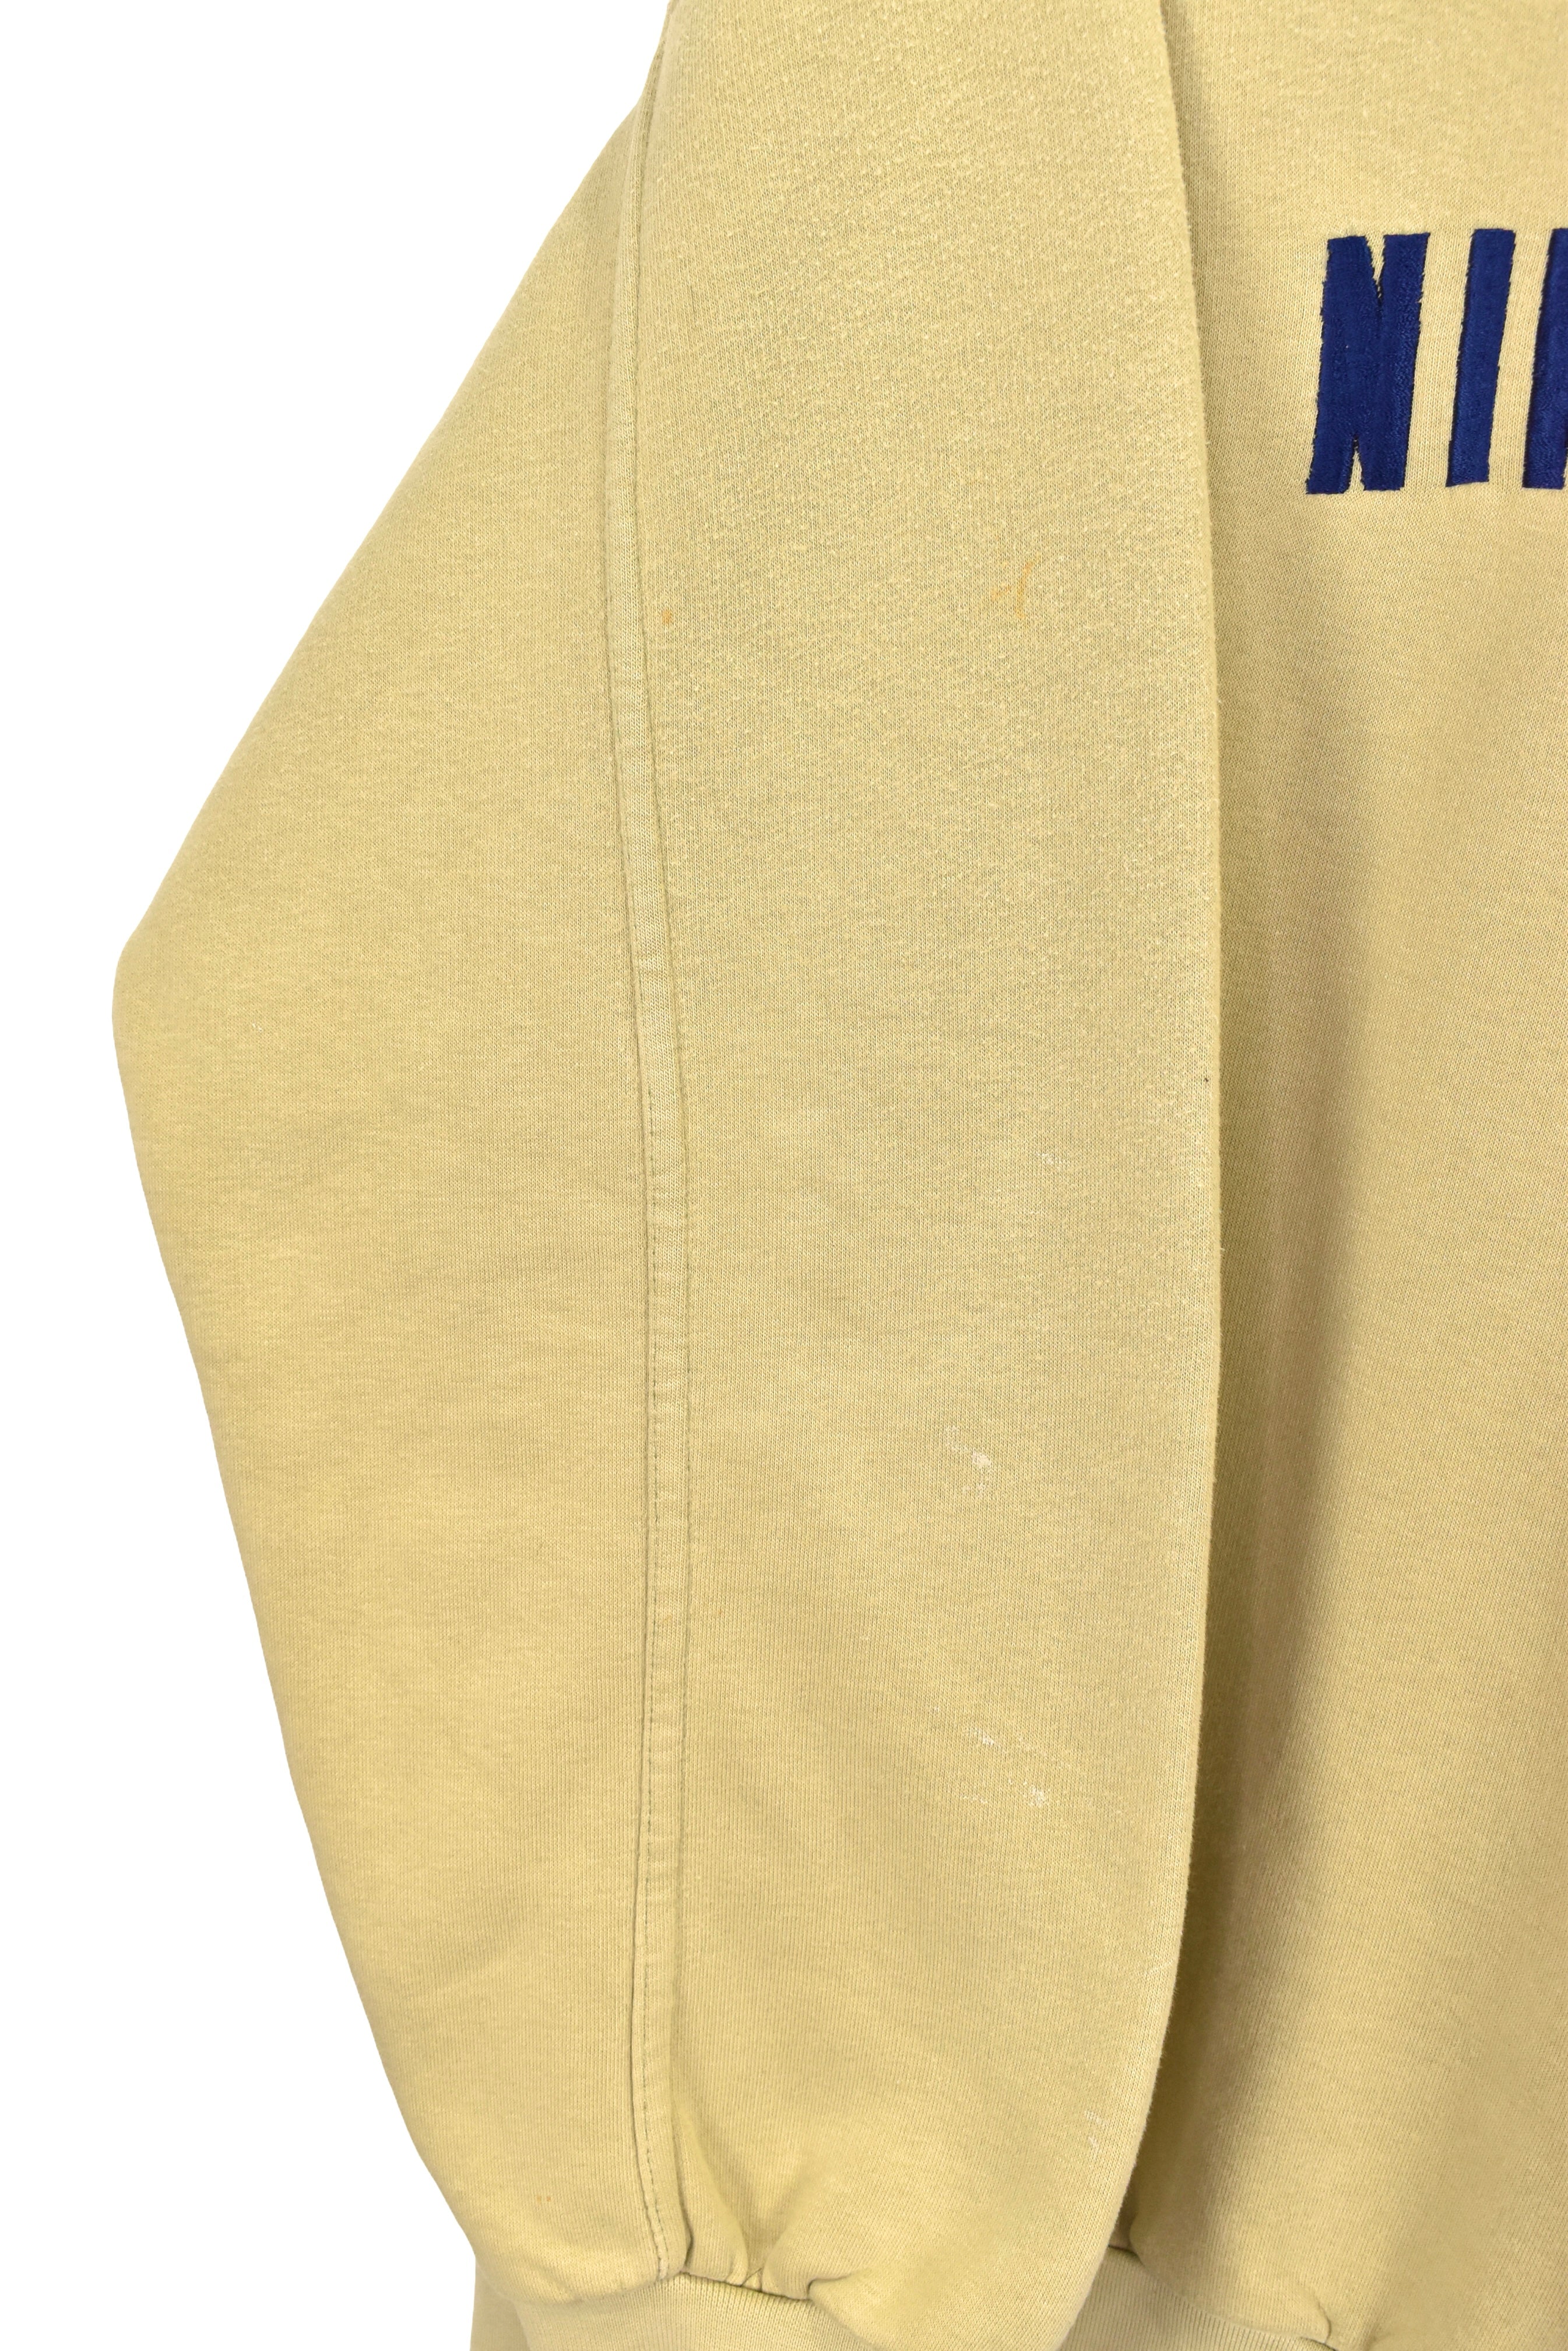 Vintage Nike sweatshirt, beige embroidered crewneck - XL